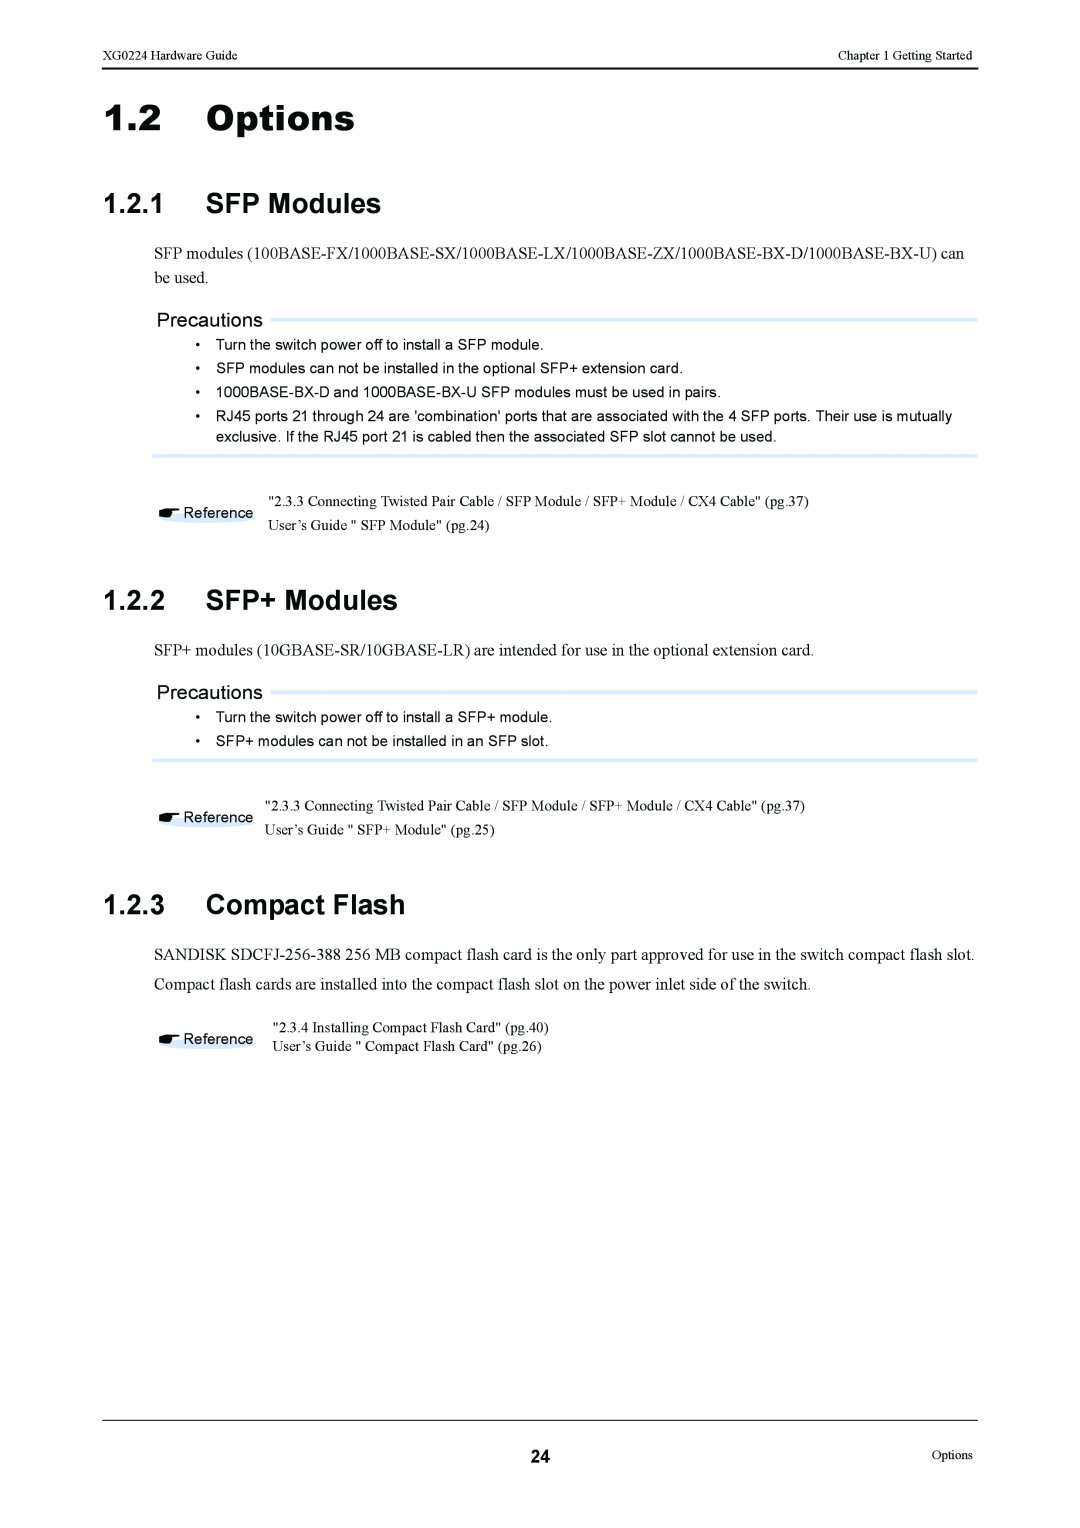 Fujitsu XG0224 manual Options, SFP Modules, 1.2.2 SFP+ Modules, Compact Flash 